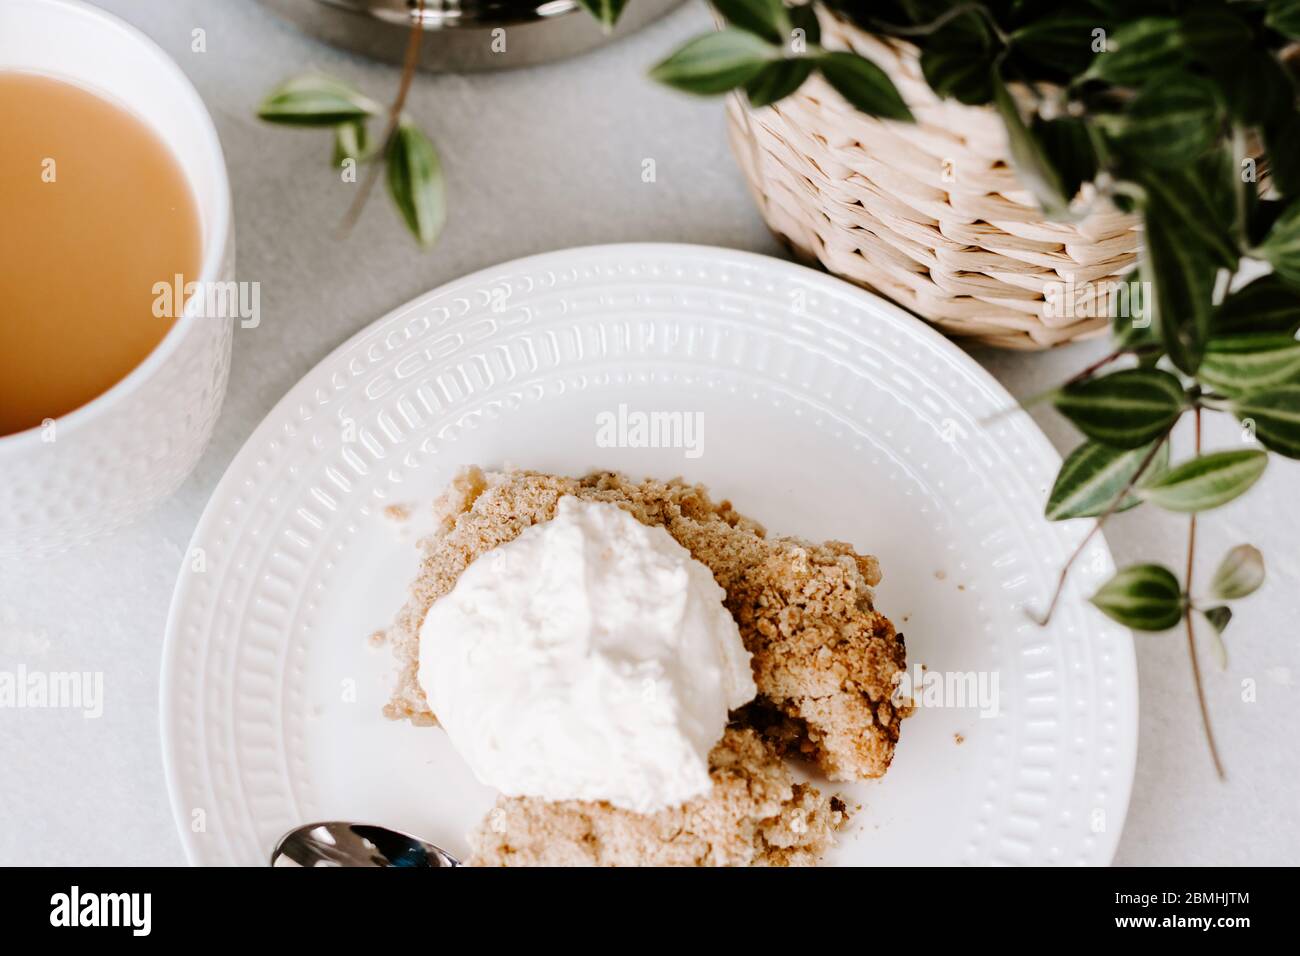 Sweet treat, dessert, apple crumble, apple pie, cream, tea, afternoon tea, relaxing concept, plant, blogging photo, blog image, white plate, food, eat Stock Photo